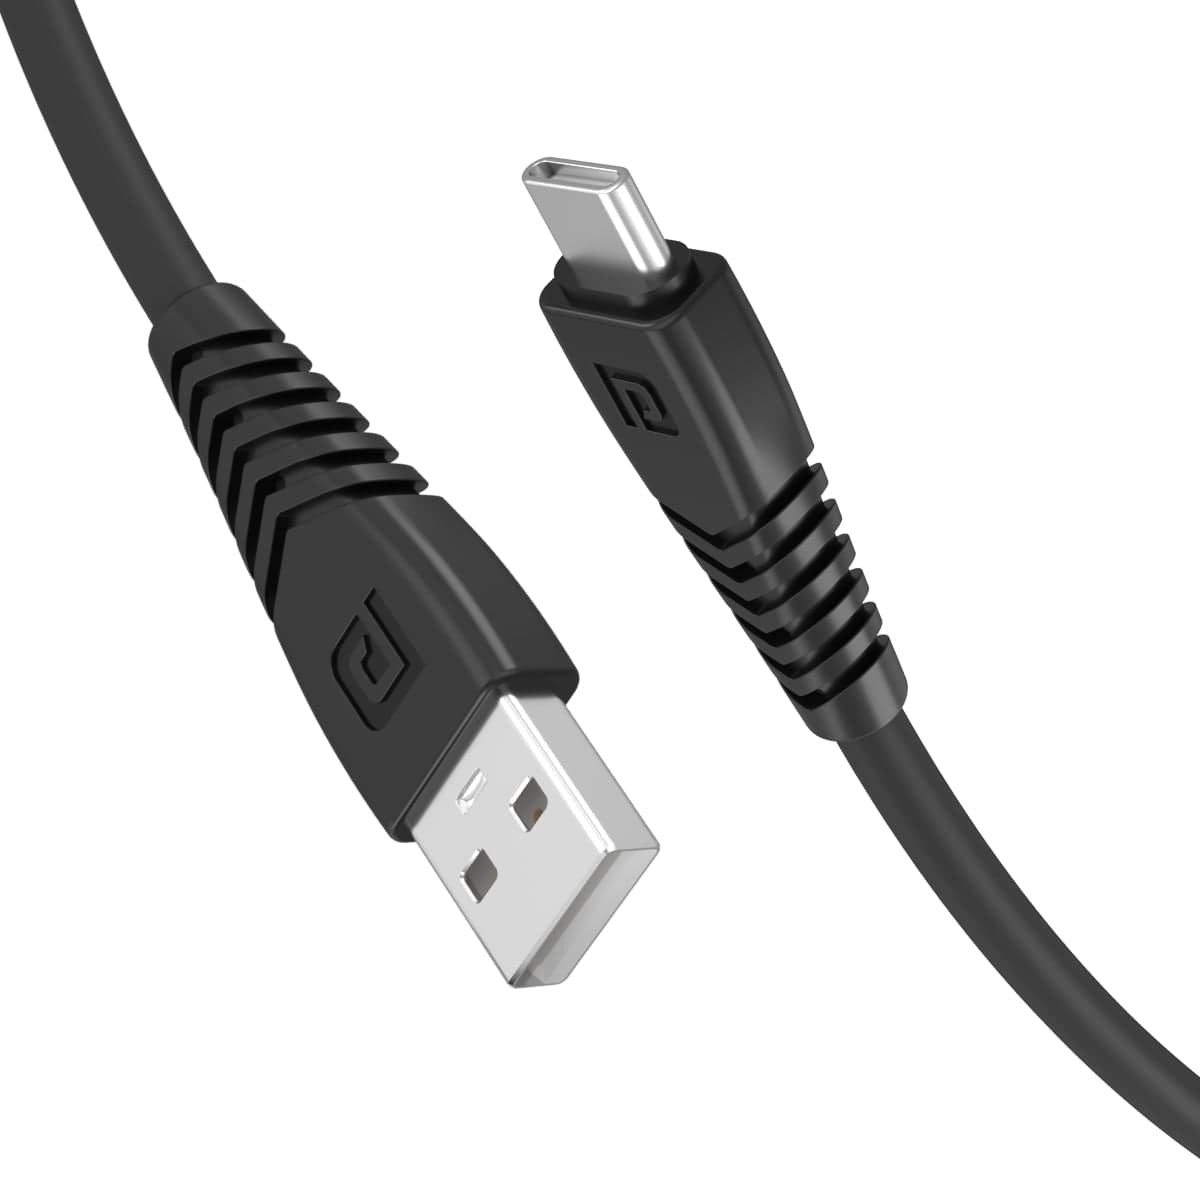 Buy Portronics Konnect Core Type C cable